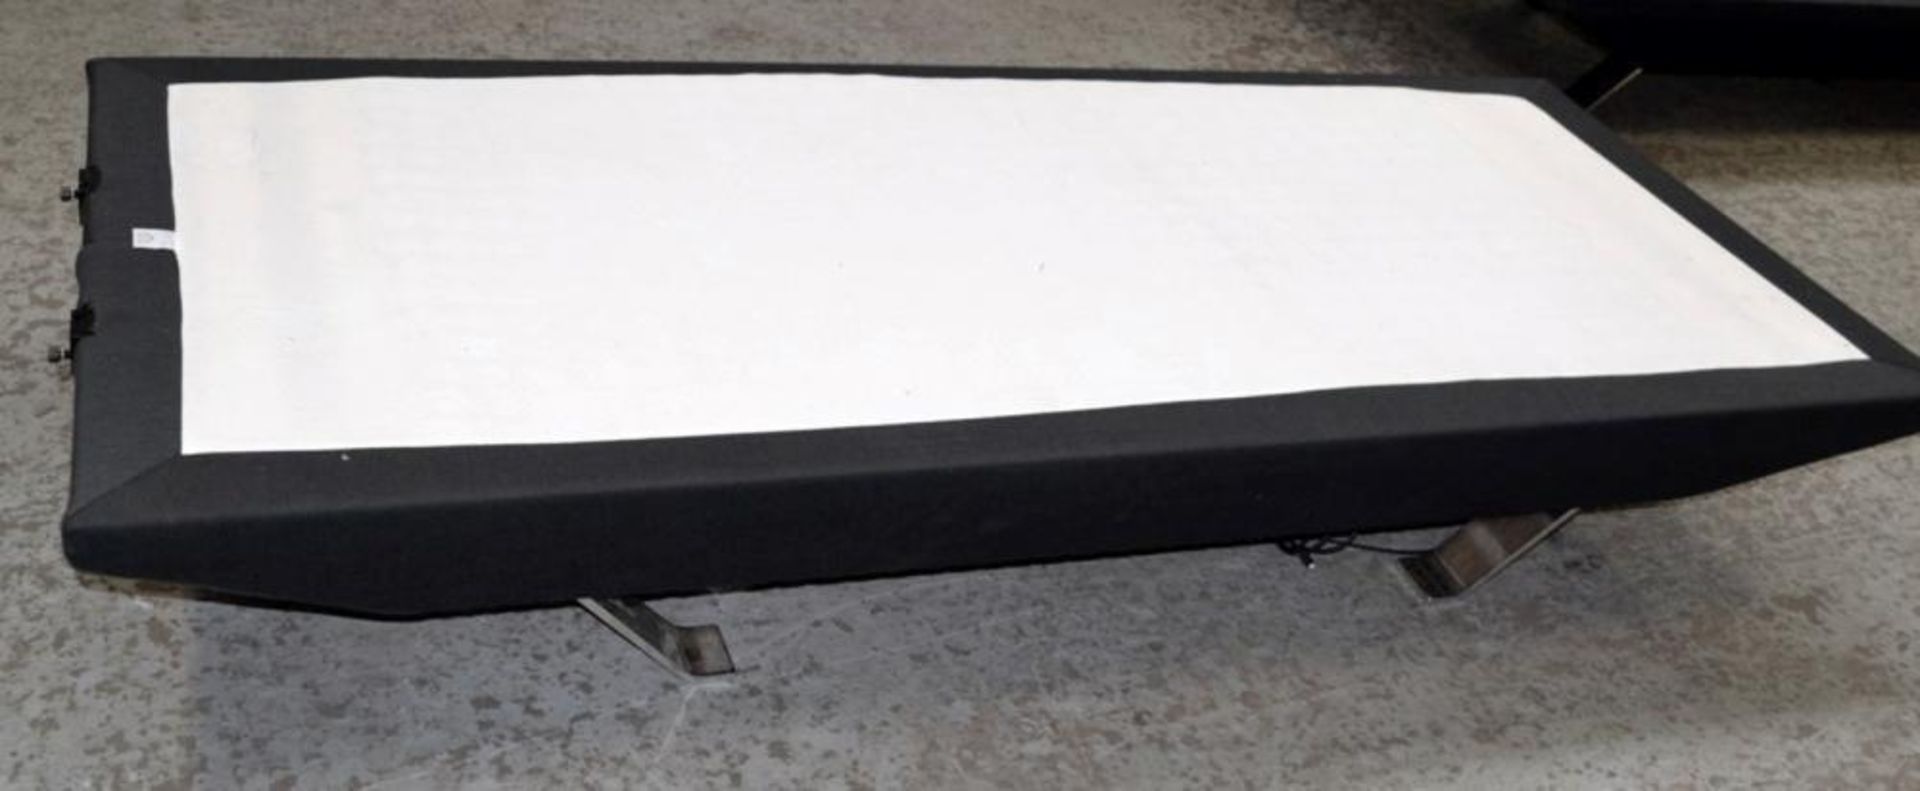 1 x Jensen EDEN Adjustable Superking Bed Base - W180 x L210 x H34cm - Colour: Black - CL087 - Ref: - Image 2 of 13